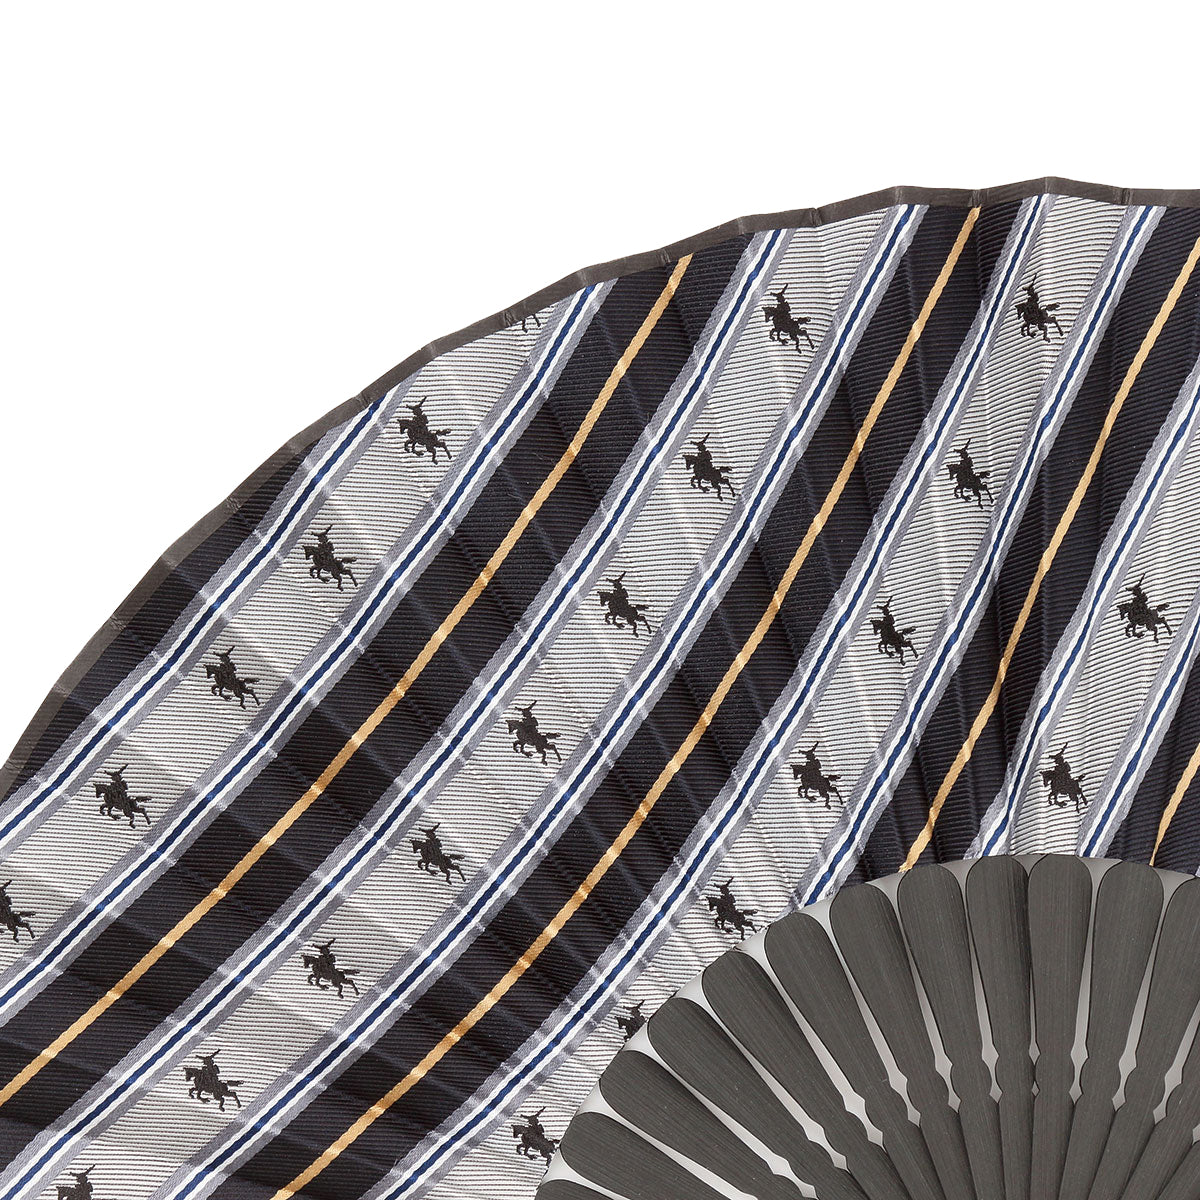 Hand Made Japanese Folding Fan -Striped Pattern Jacquard Woven Kyoto Silk & Bamboo Made in Japan FORTUNA Tokyo